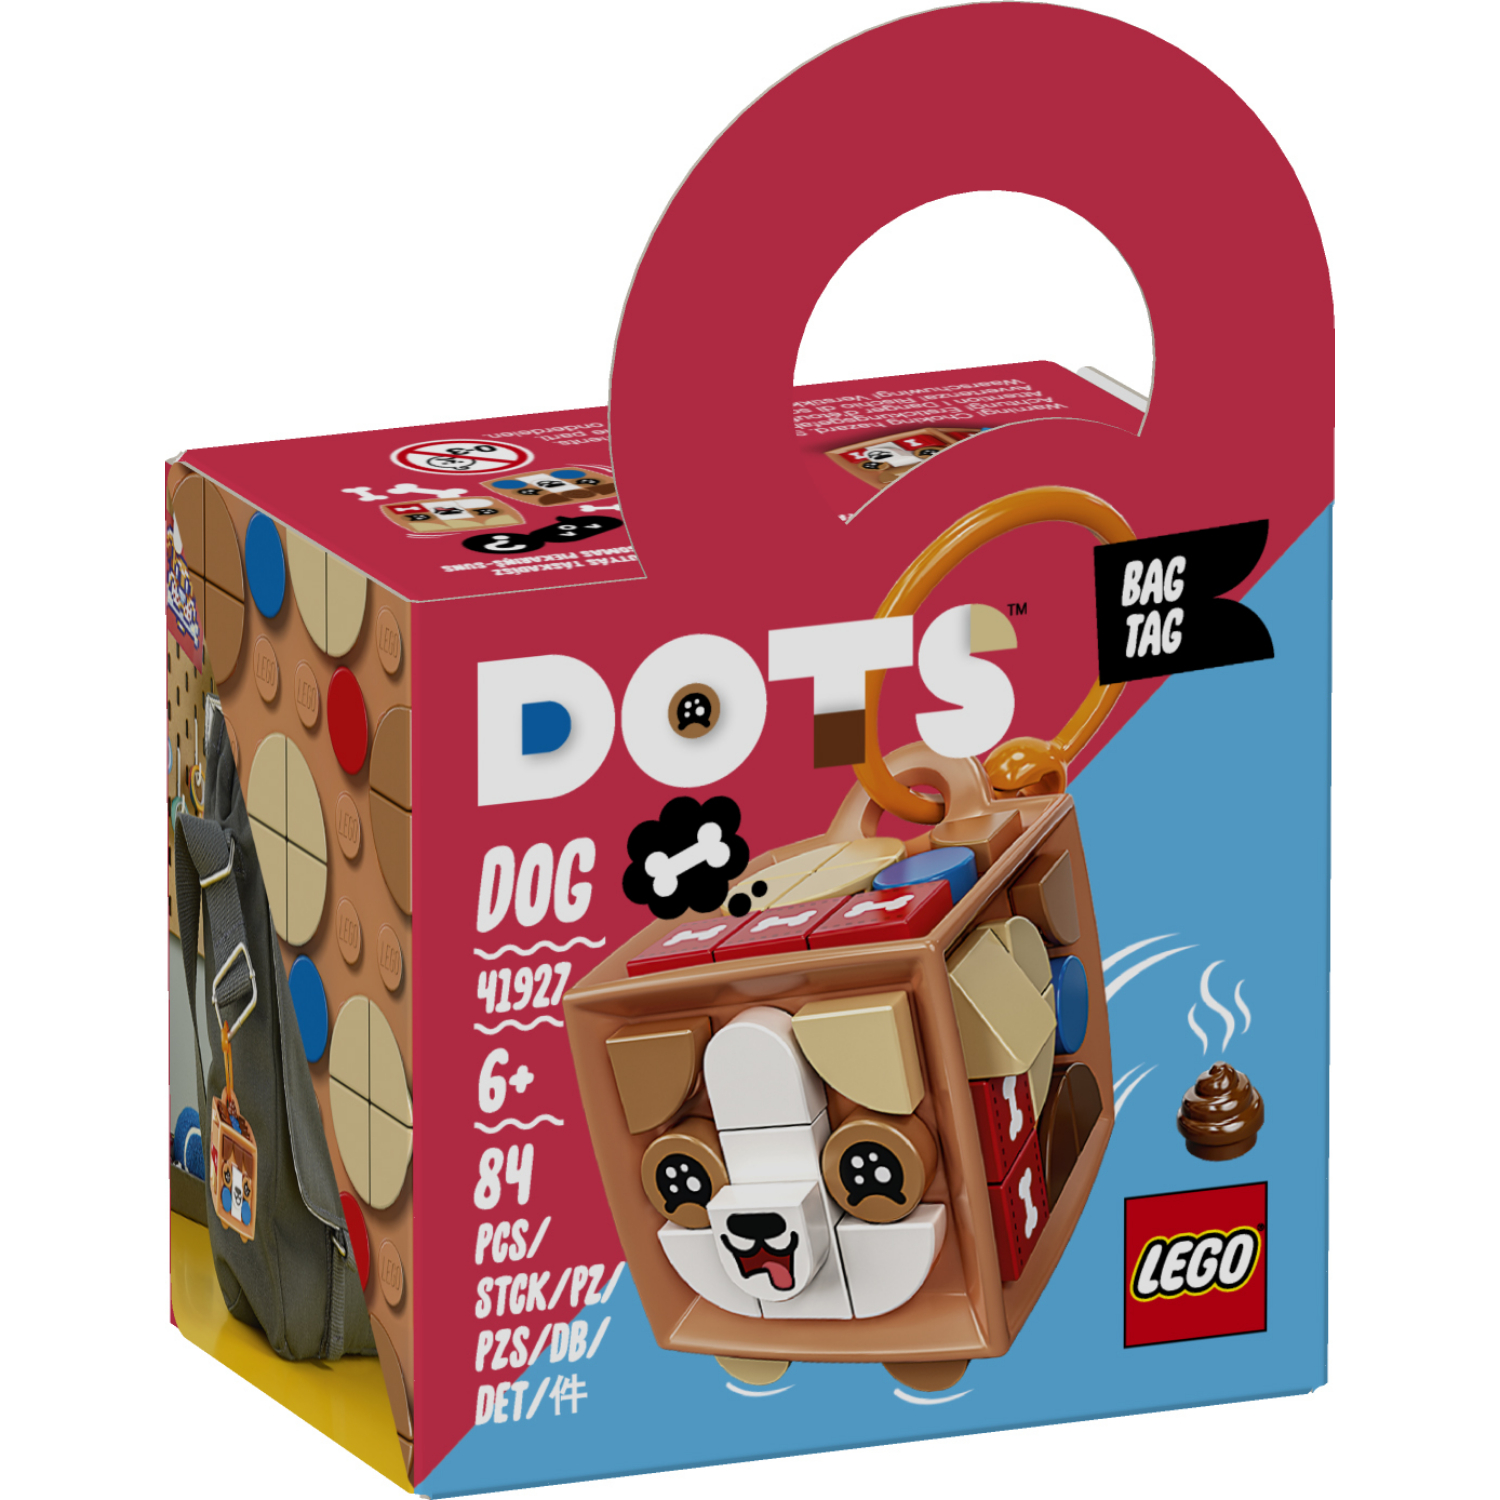 LEGO DOTS 41927 BAG TAG DOG